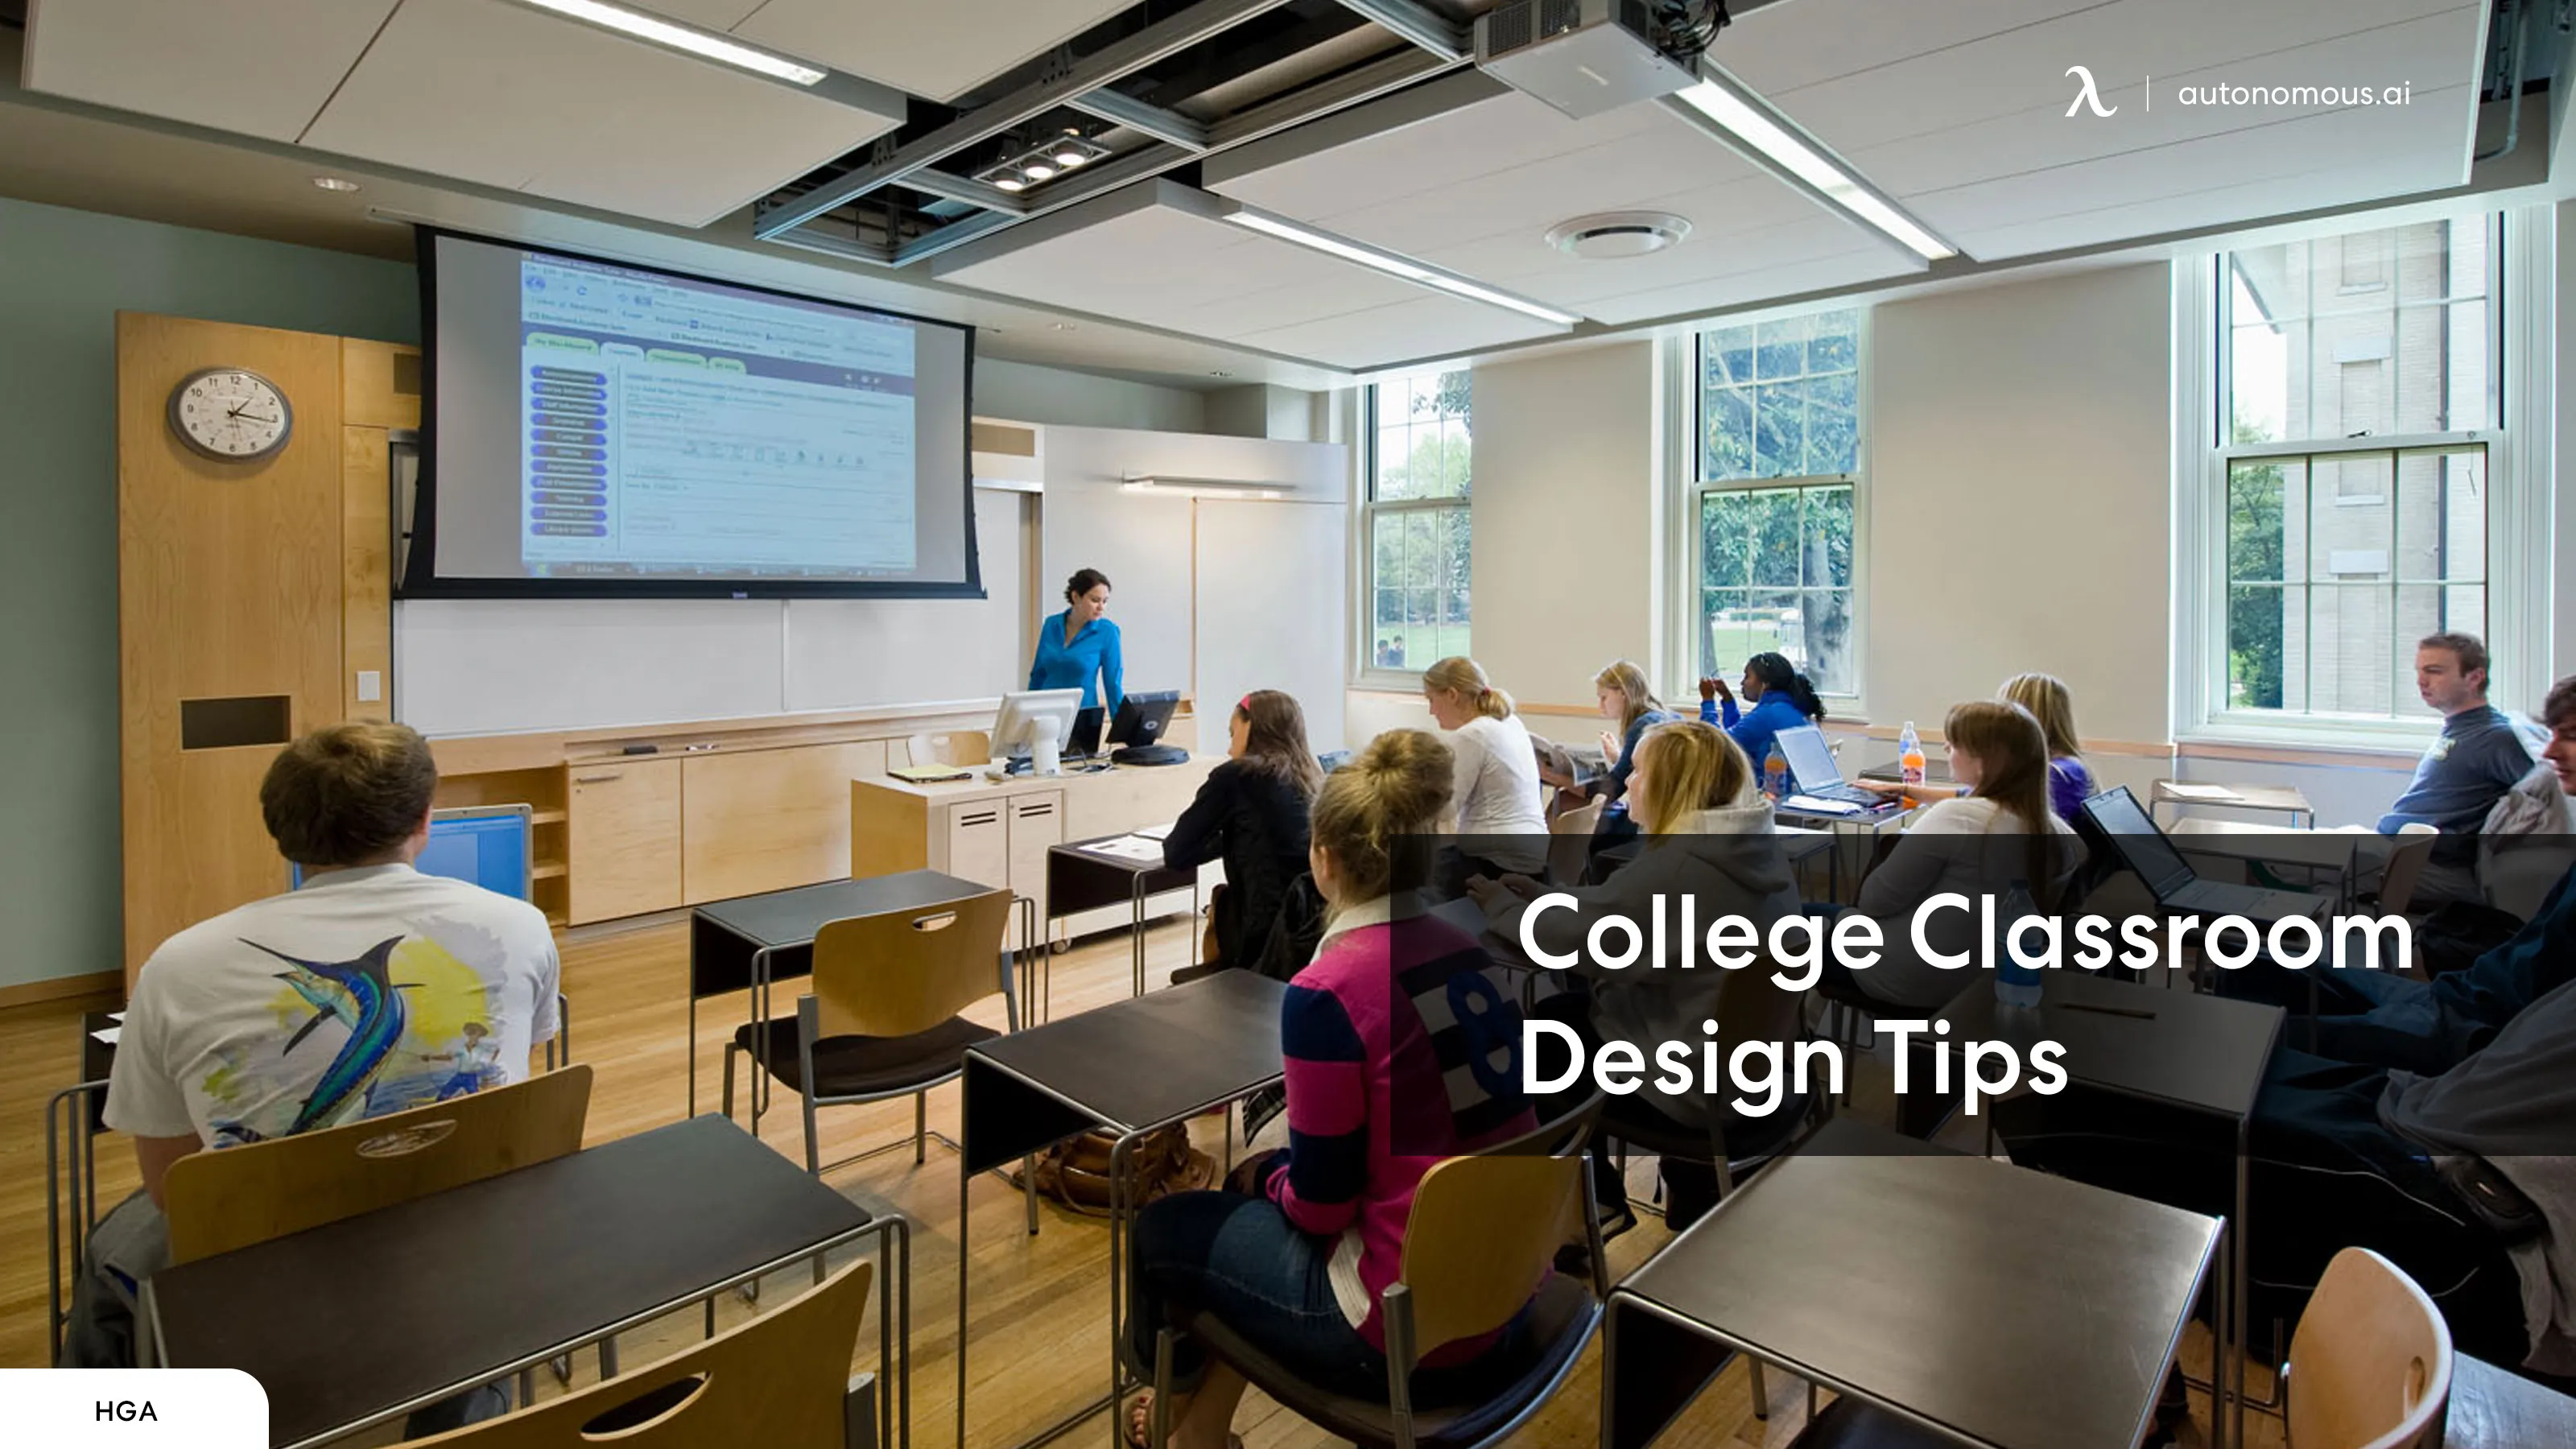 College Classroom Design Tips for Inspiring Environment